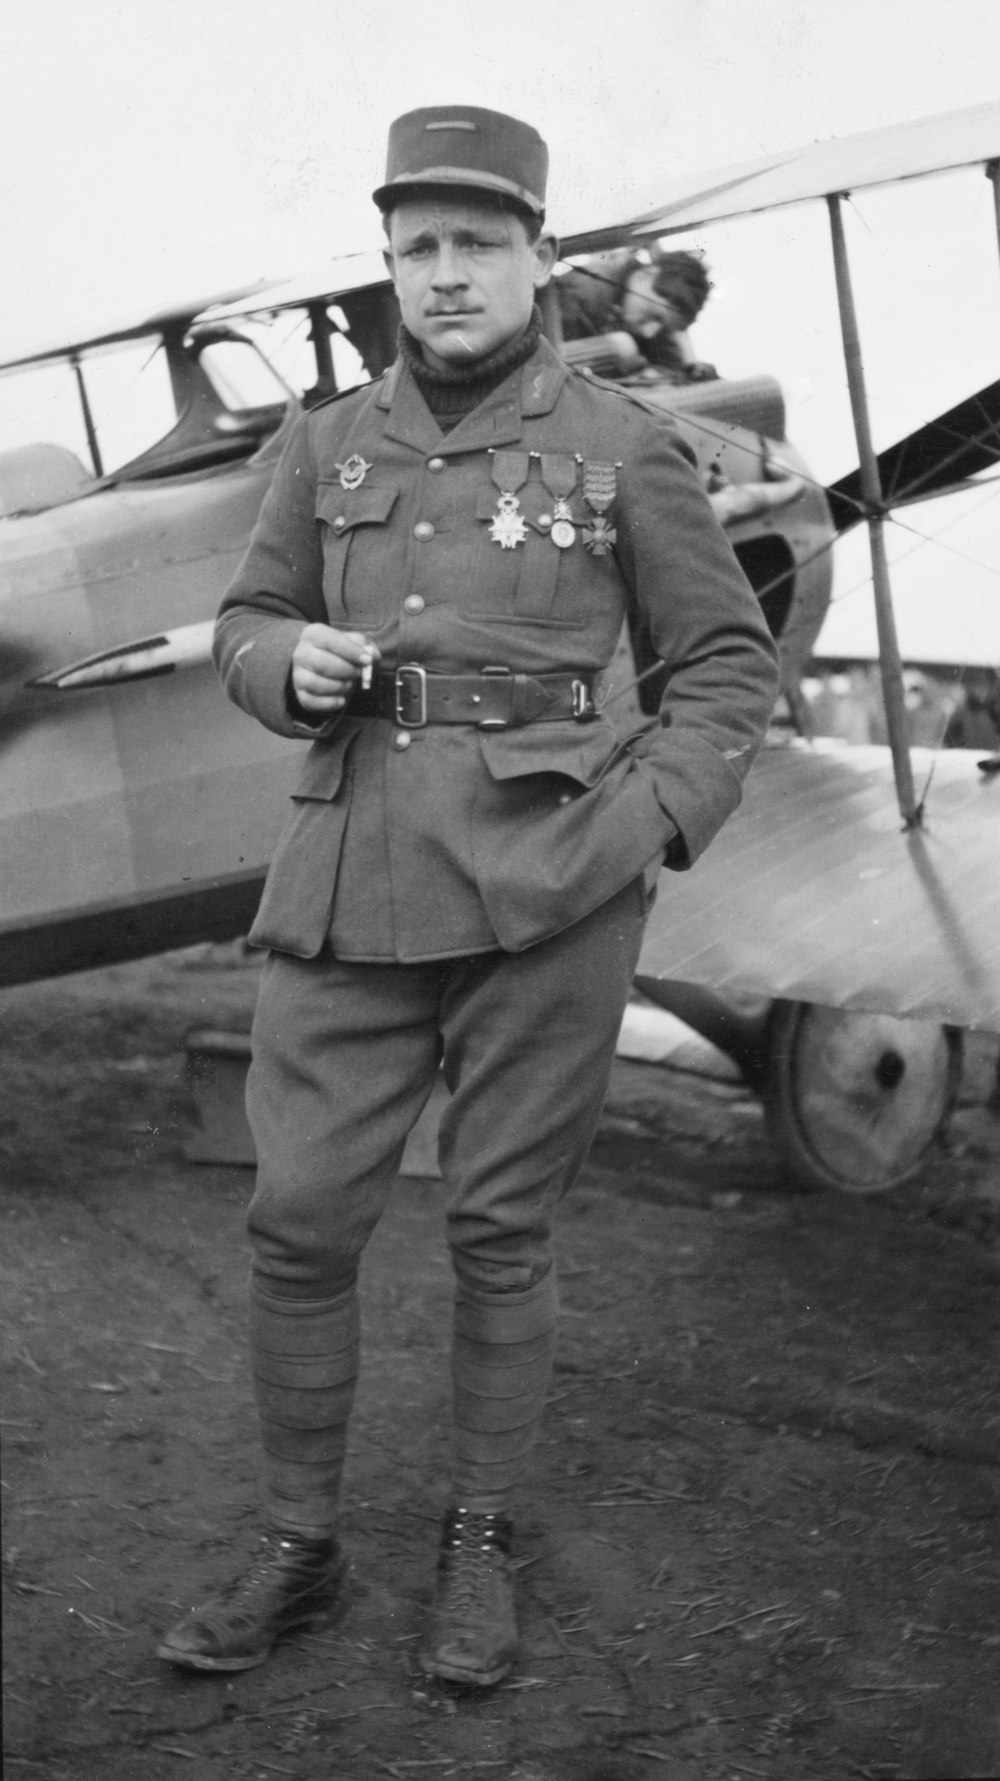 Lt. Raoul Lufbery, full-length portrait, standing alongside airplane, in uniform, facing slightly left.